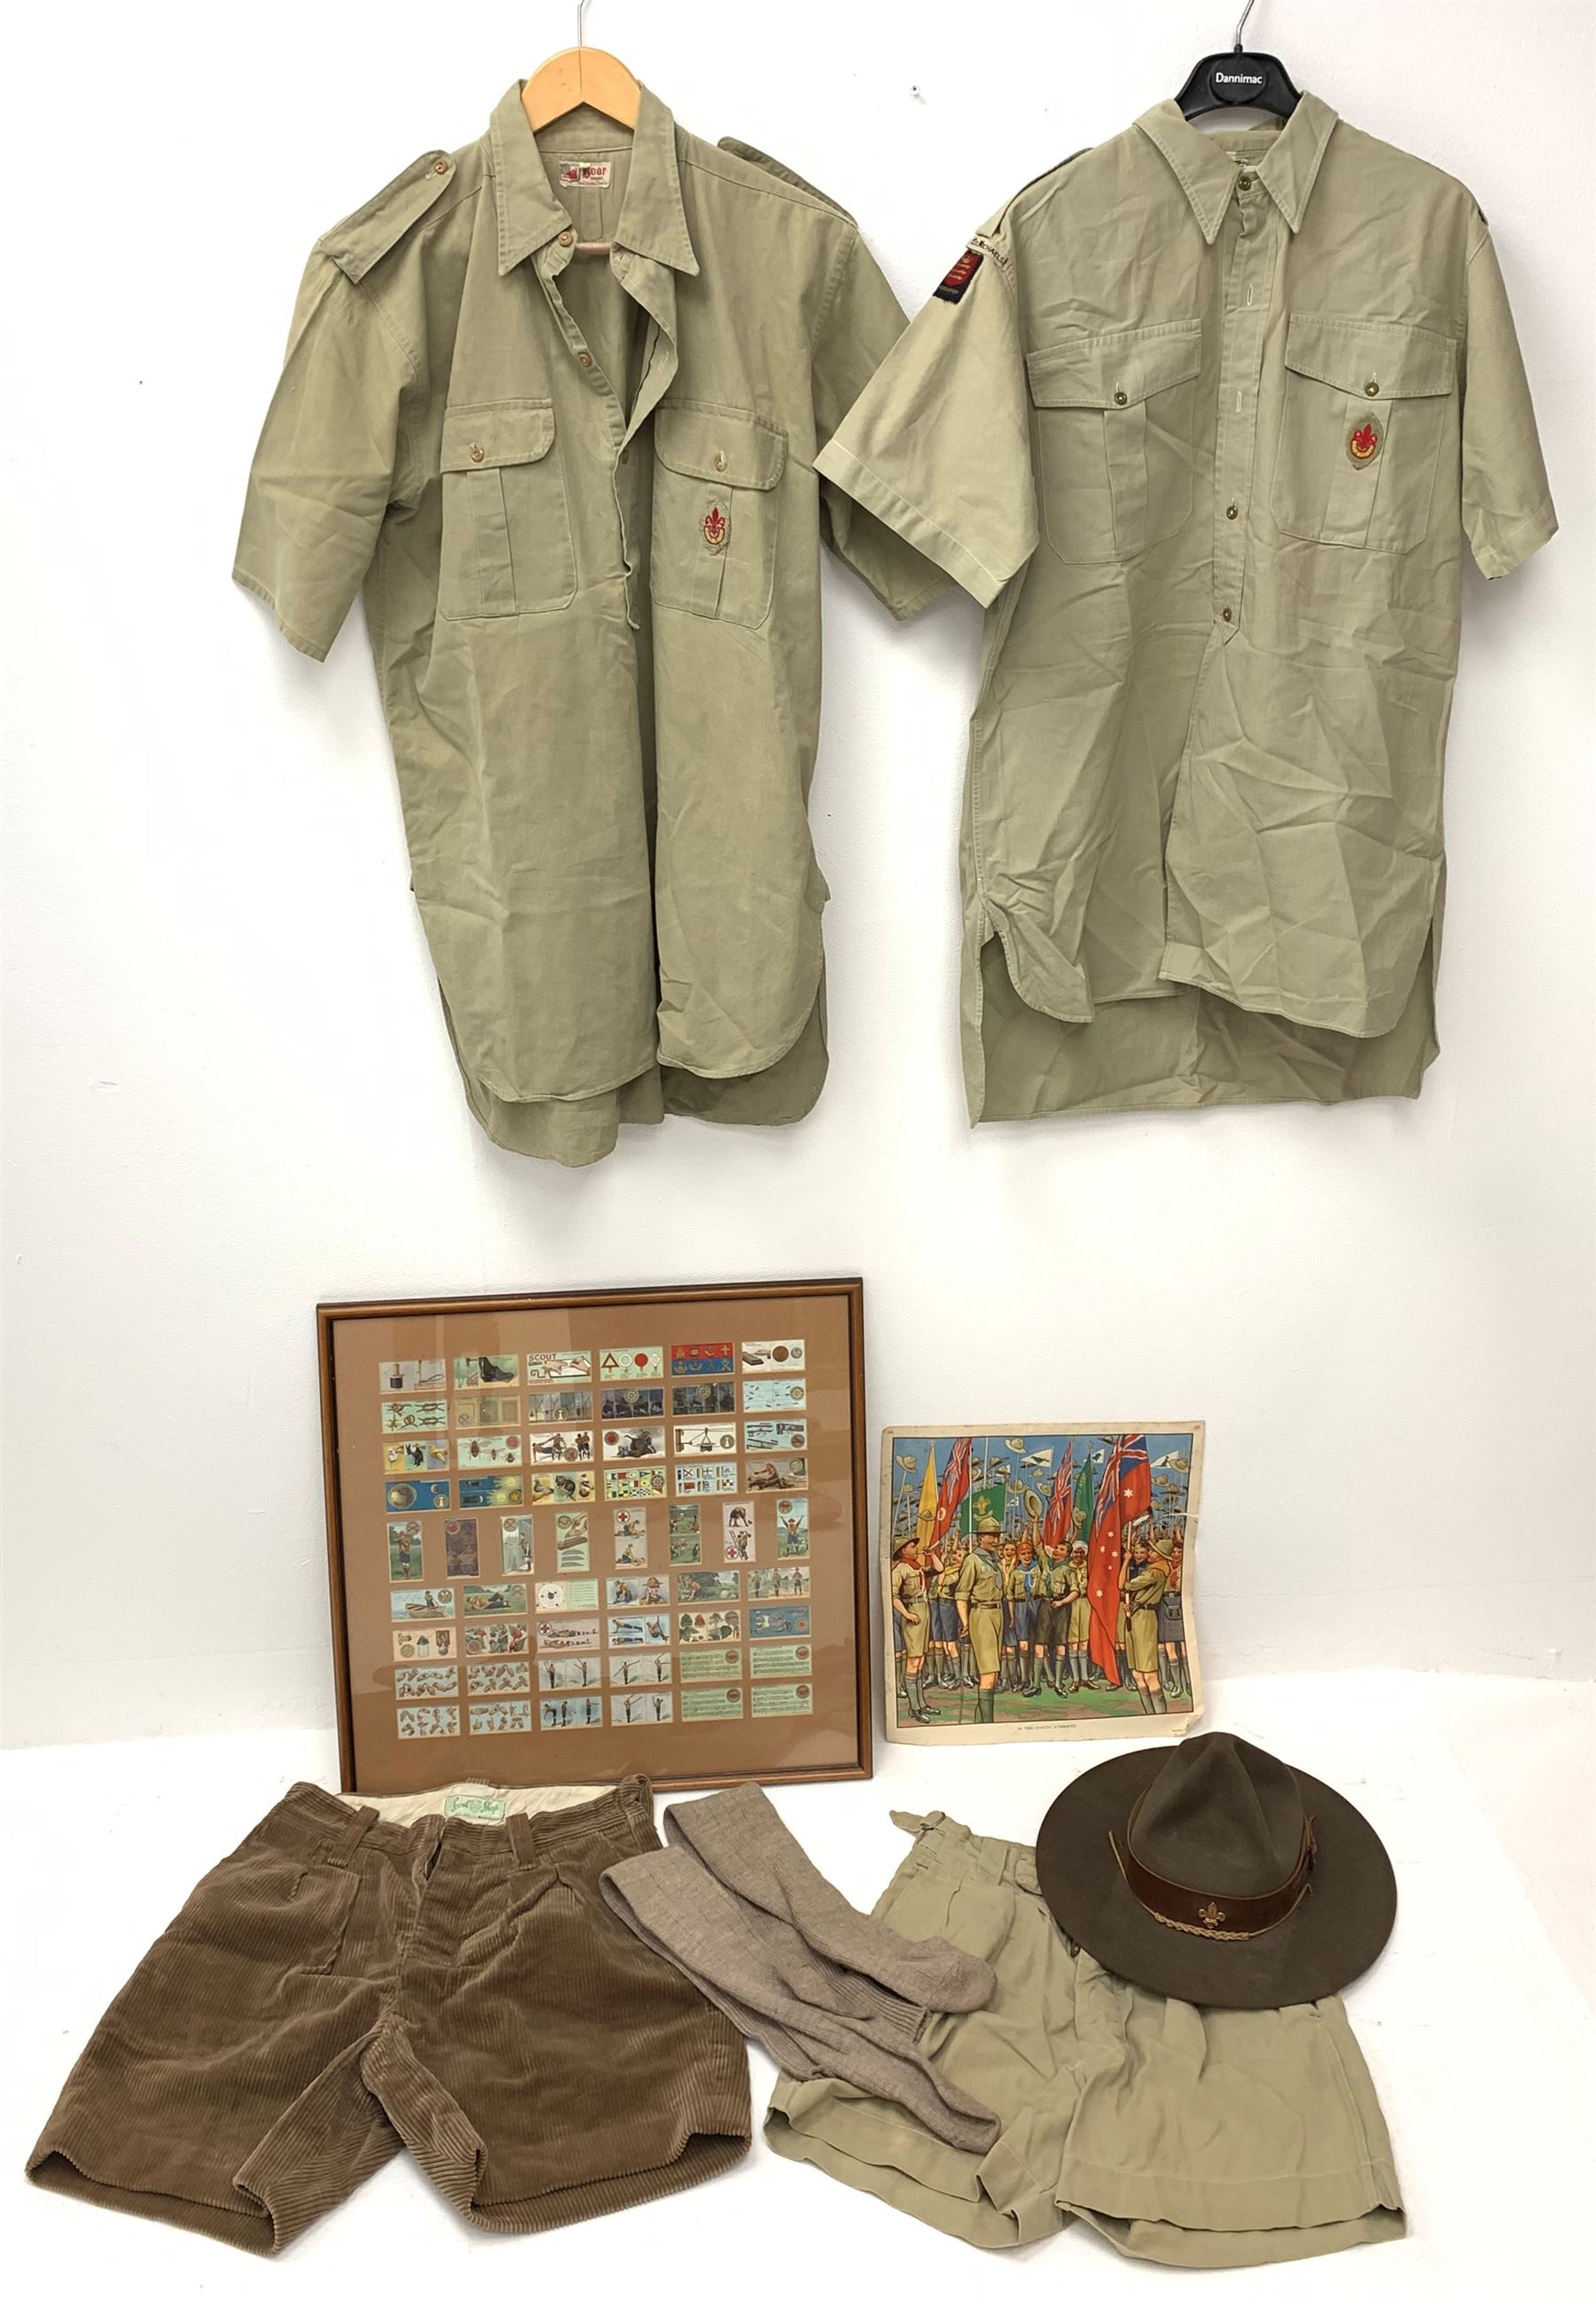 Mid 20th century Boy Scouts uniform